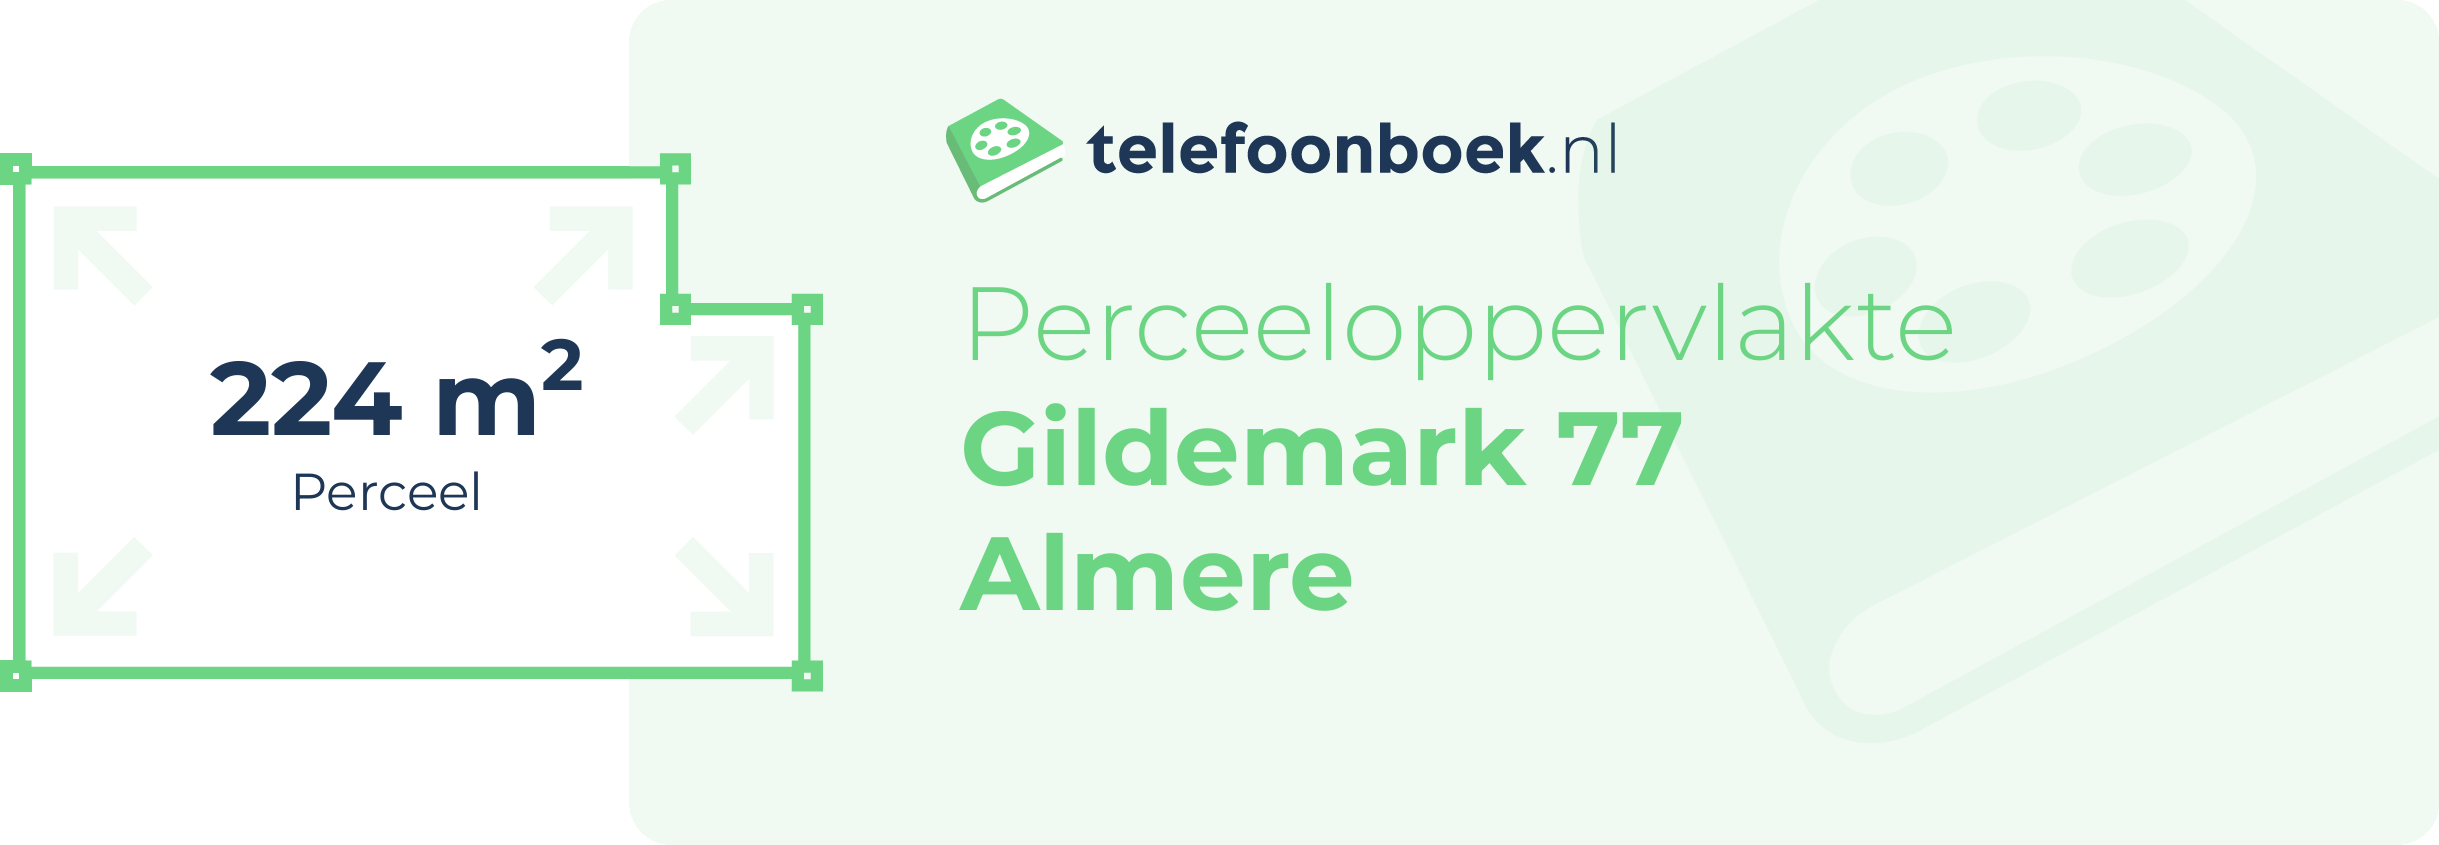 Perceeloppervlakte Gildemark 77 Almere